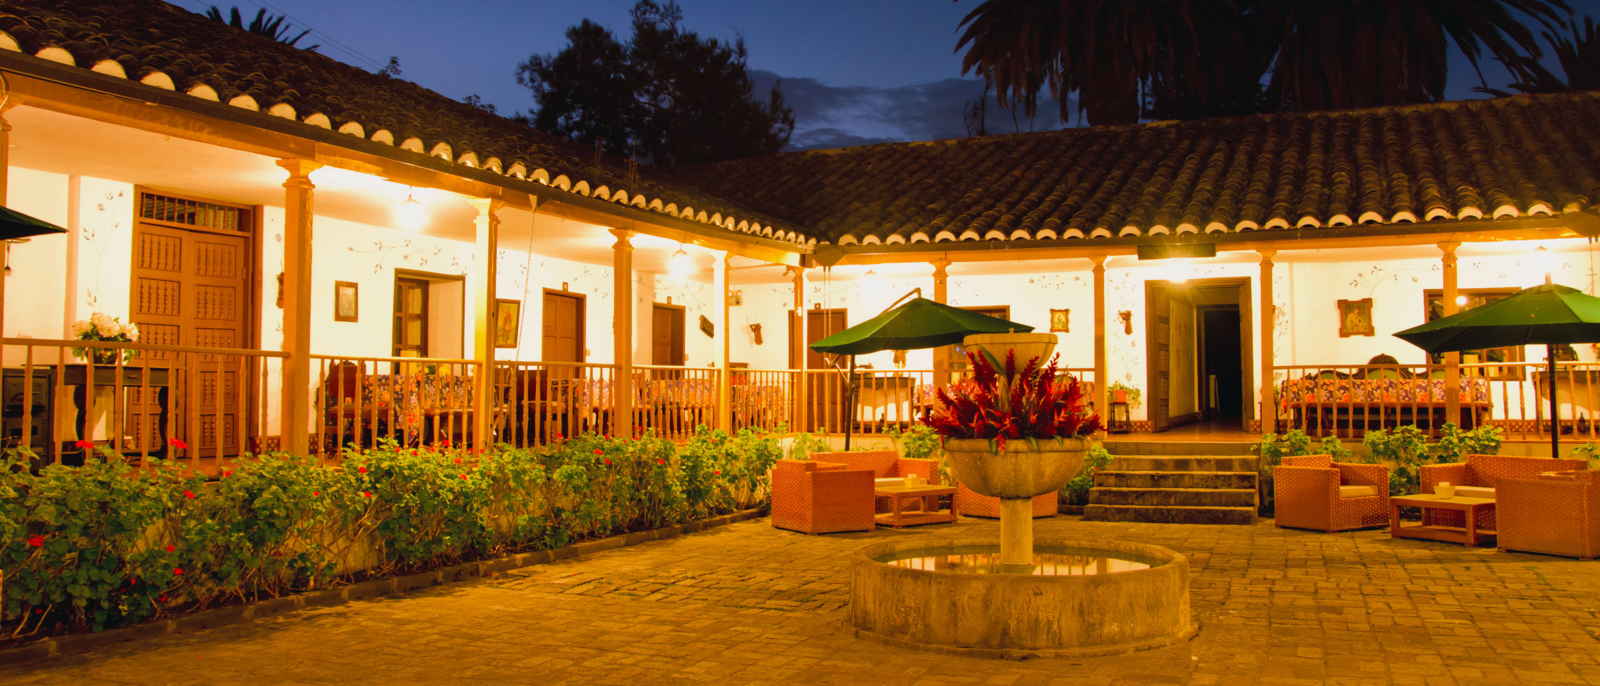 Courtyard with Fountain, Spanish Hacienda, long exposure night